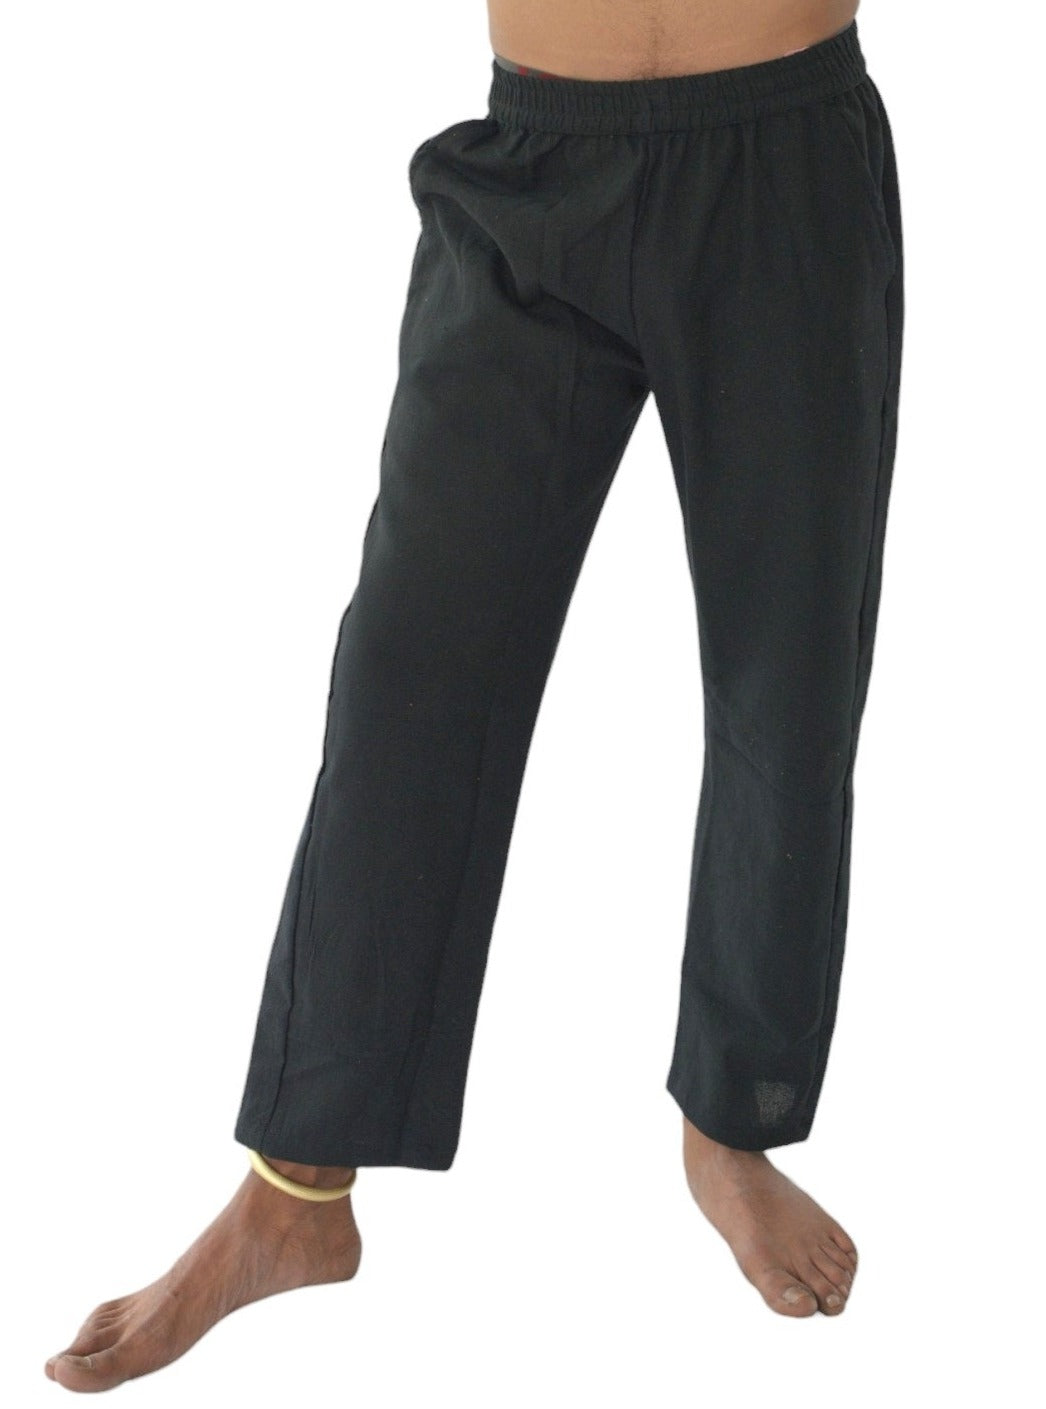 Black Unisex Organic Cotton Free Size Trousers